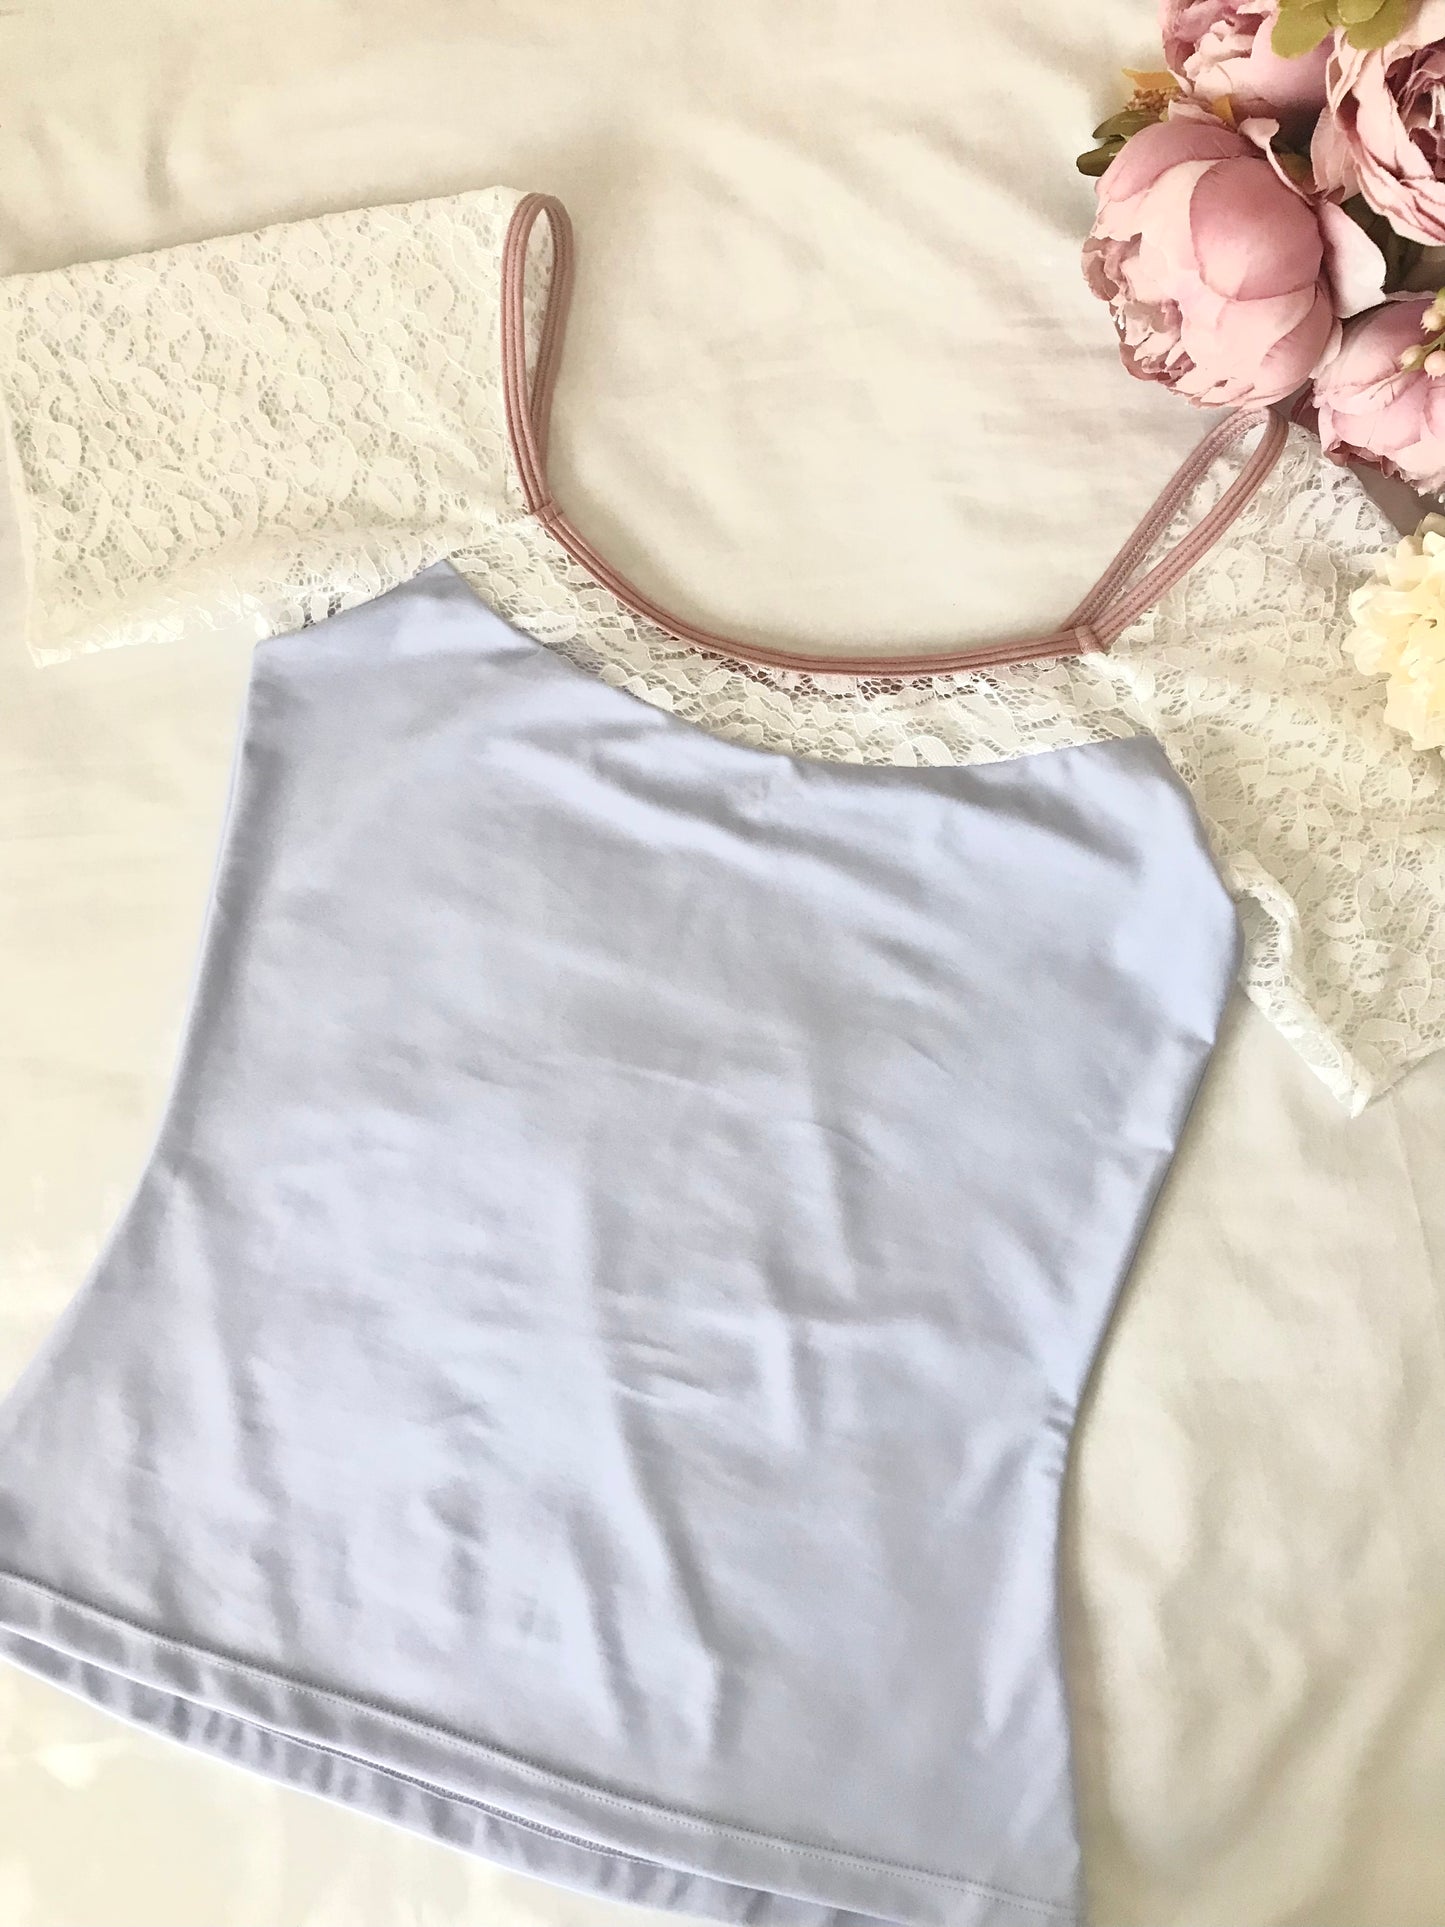 Lavender White Lace Tops